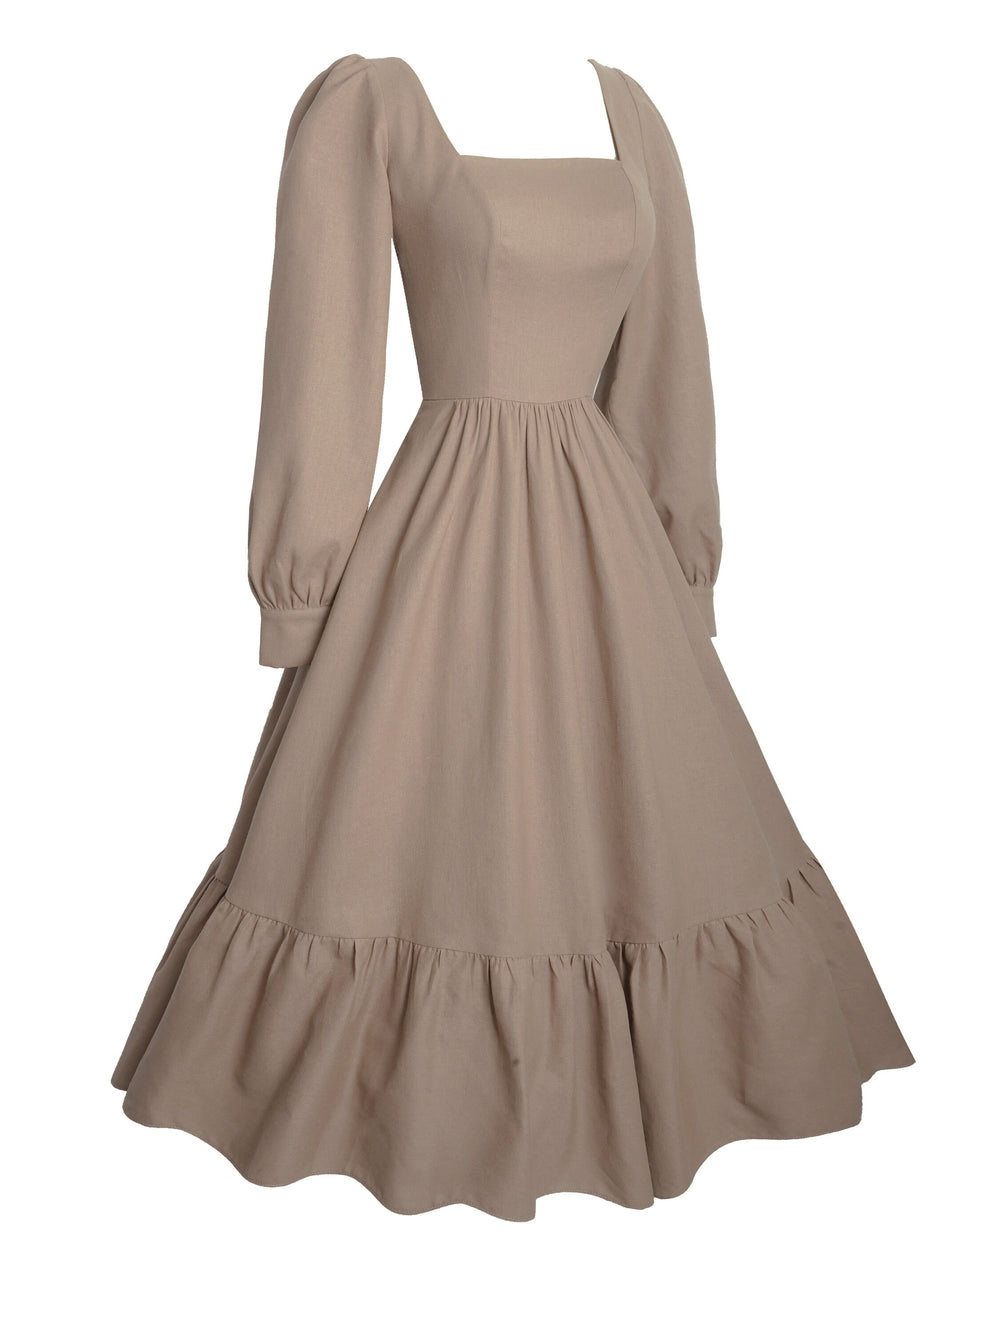 MTO - Mary Dress in Sephia Linen